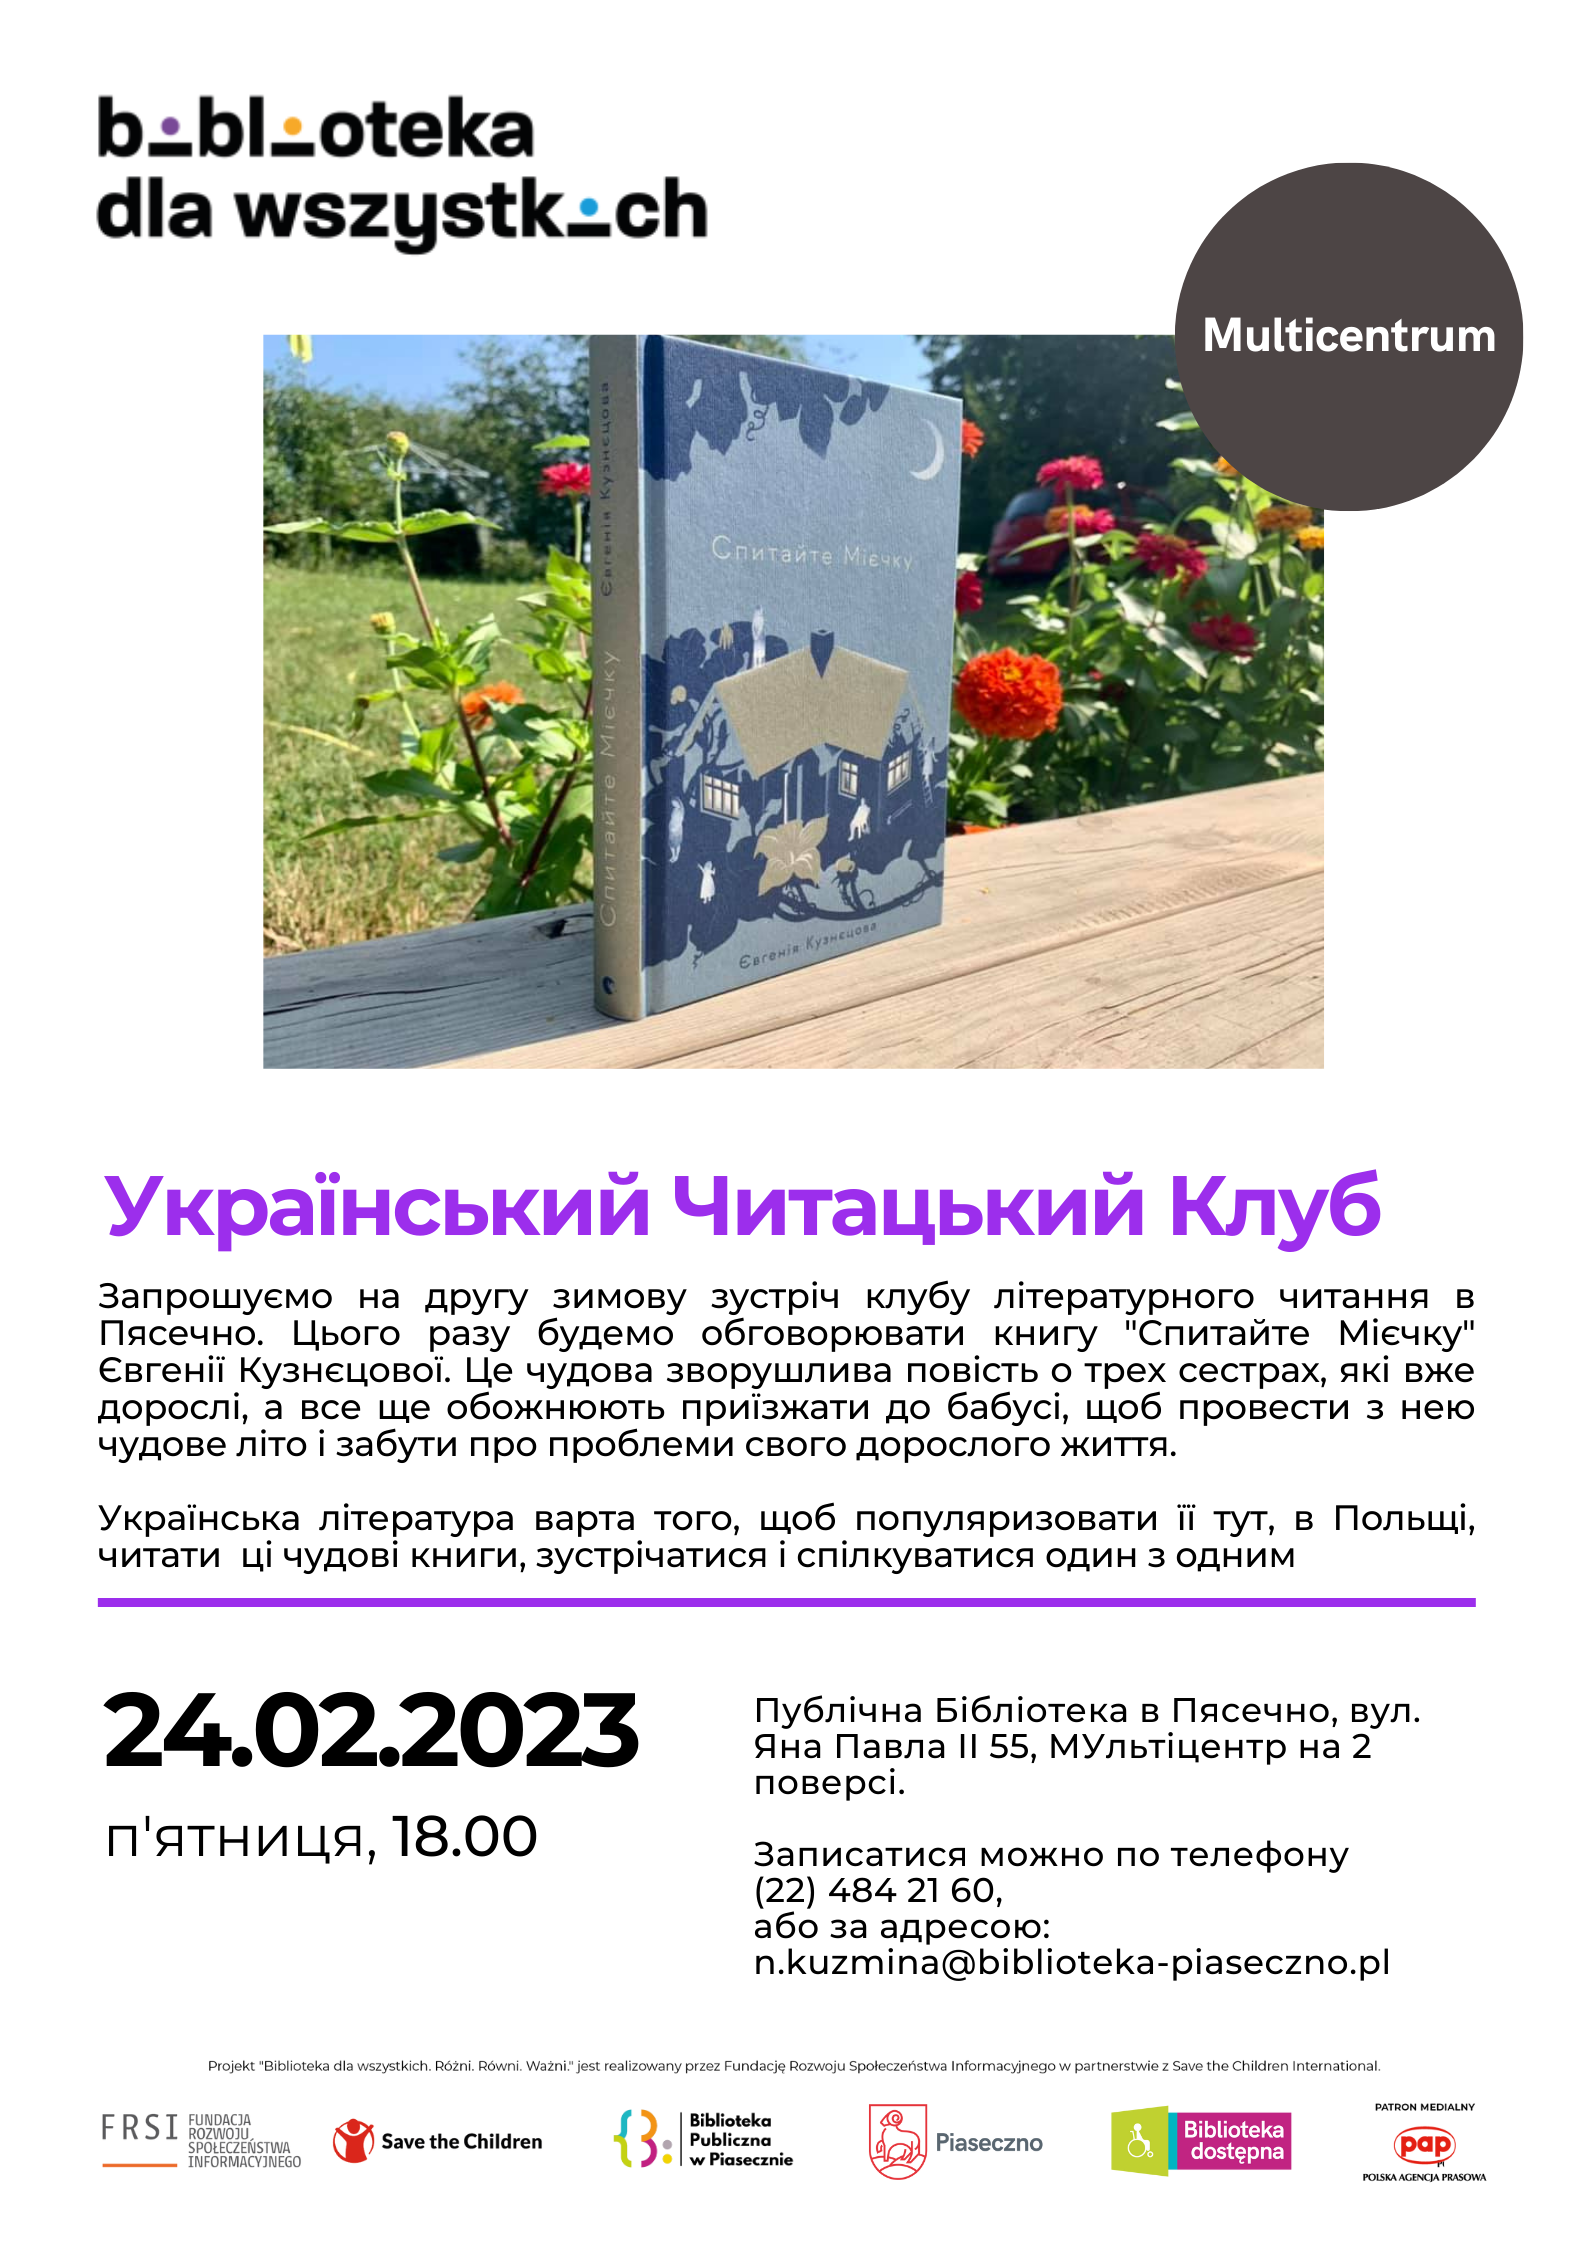 Plakat promujacy DKK ukraiński